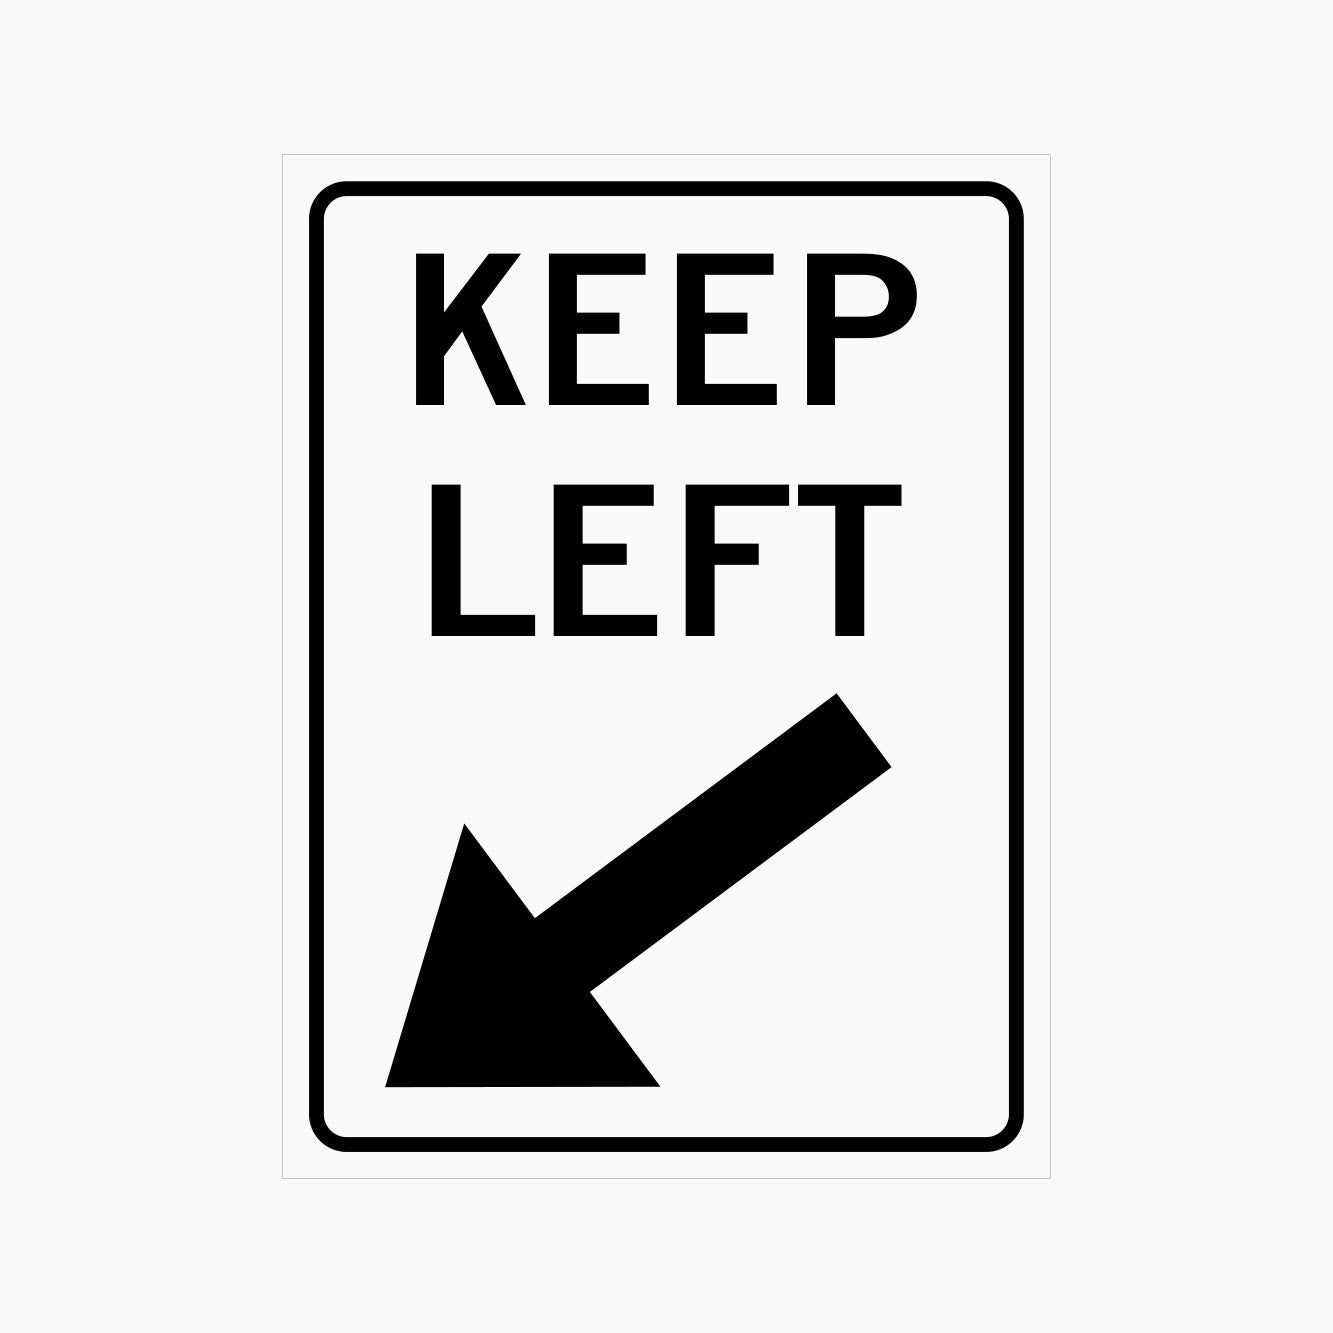 KEEP LEFT SIGN - GET SIGNS